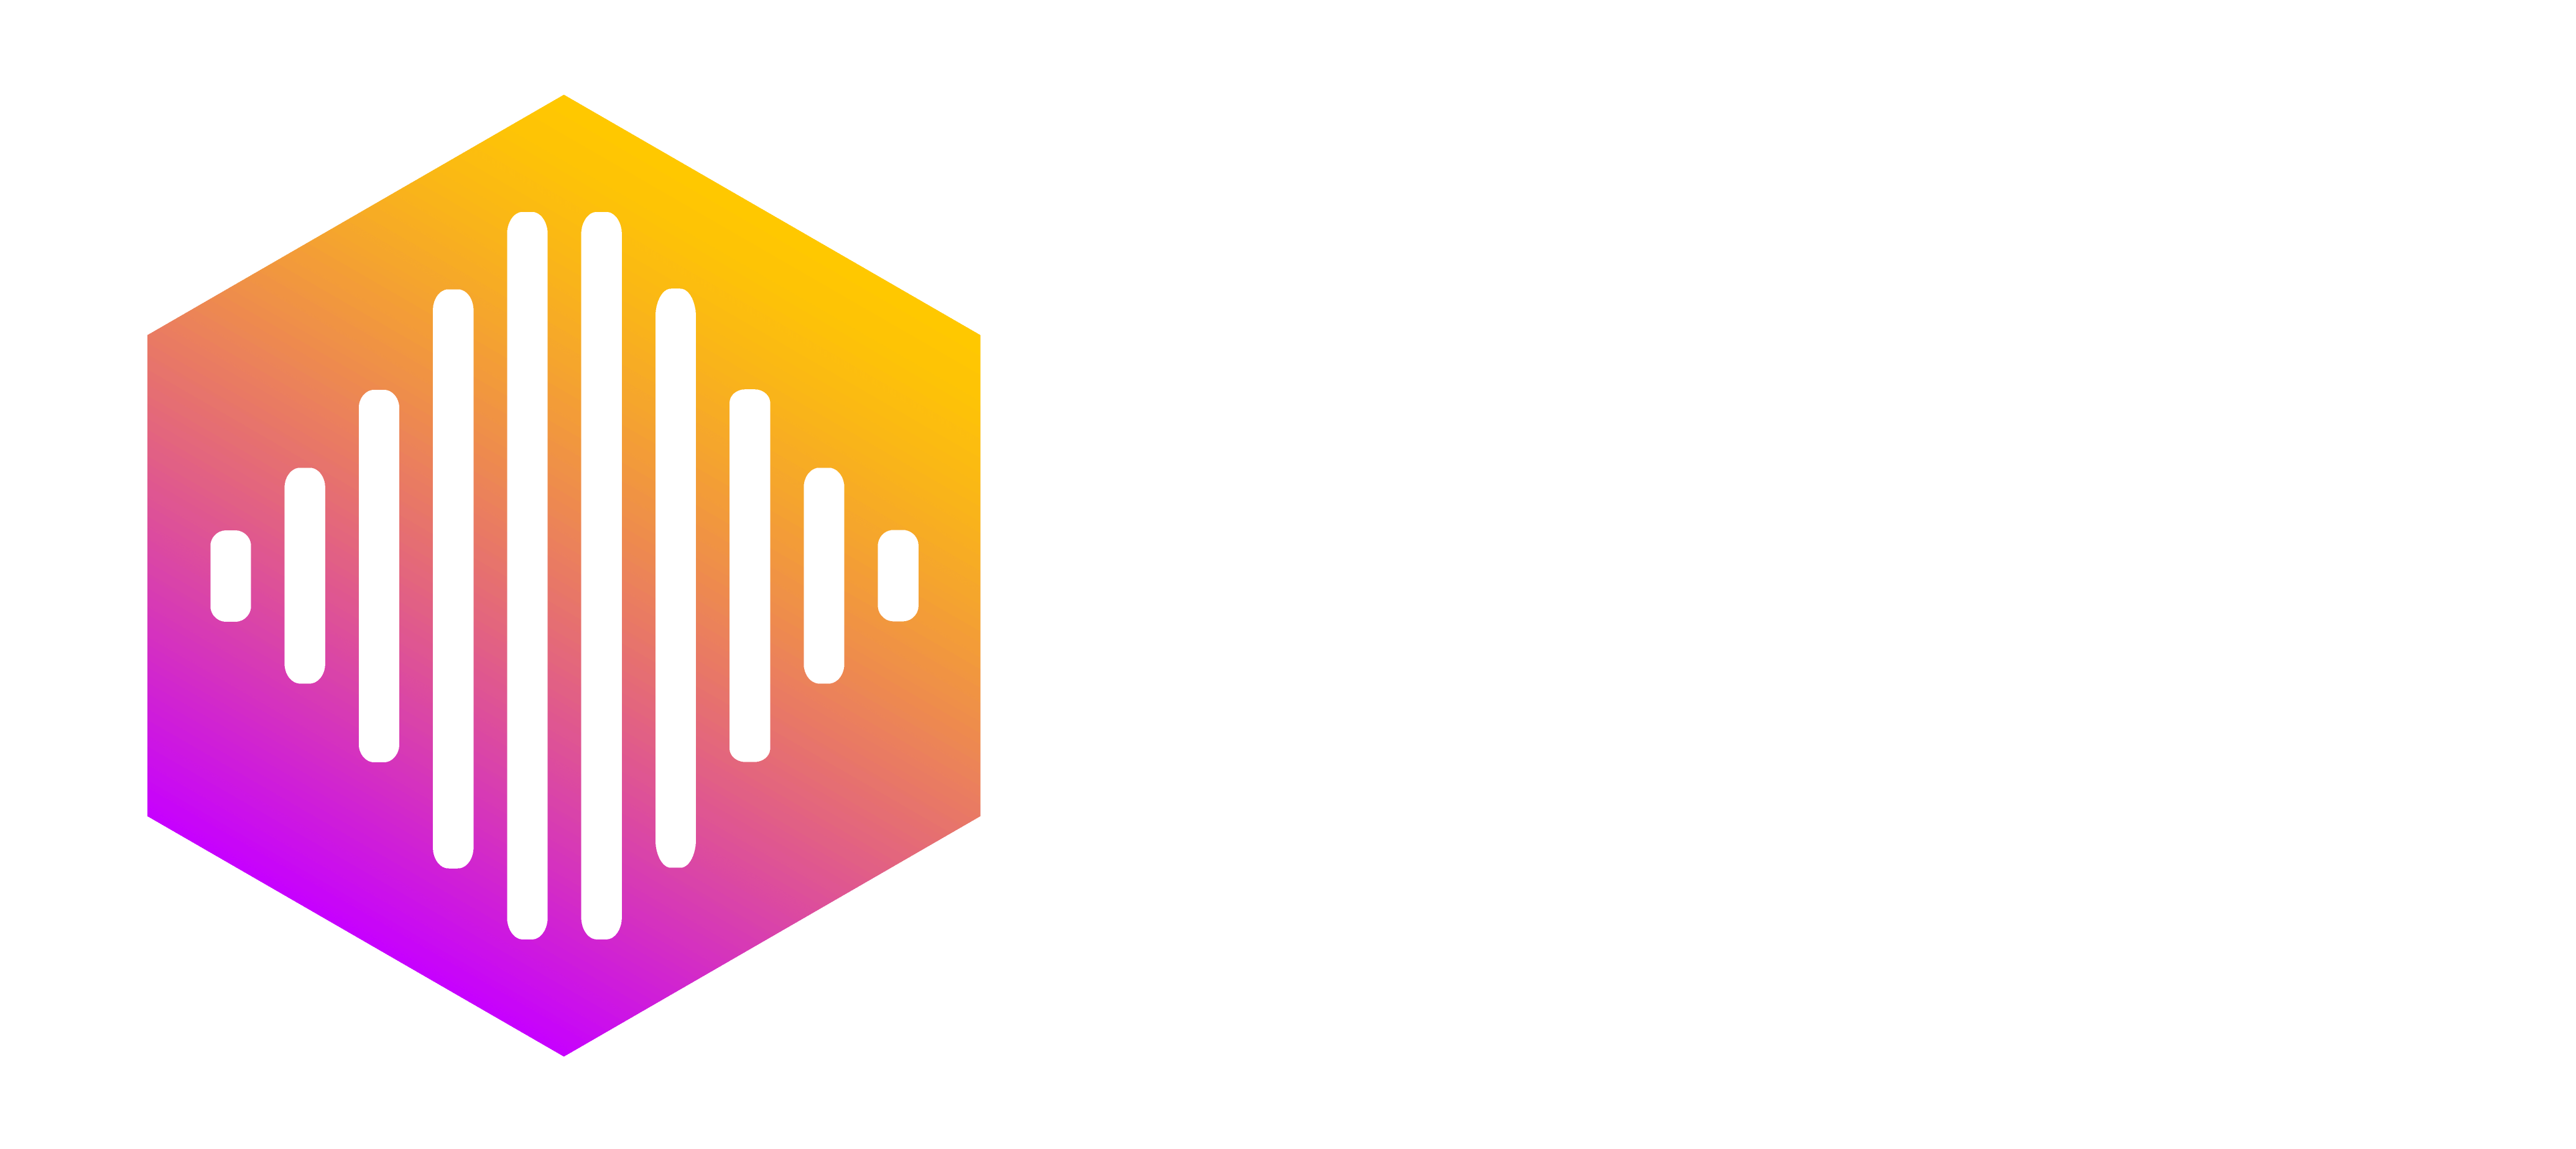 Mujic Studios